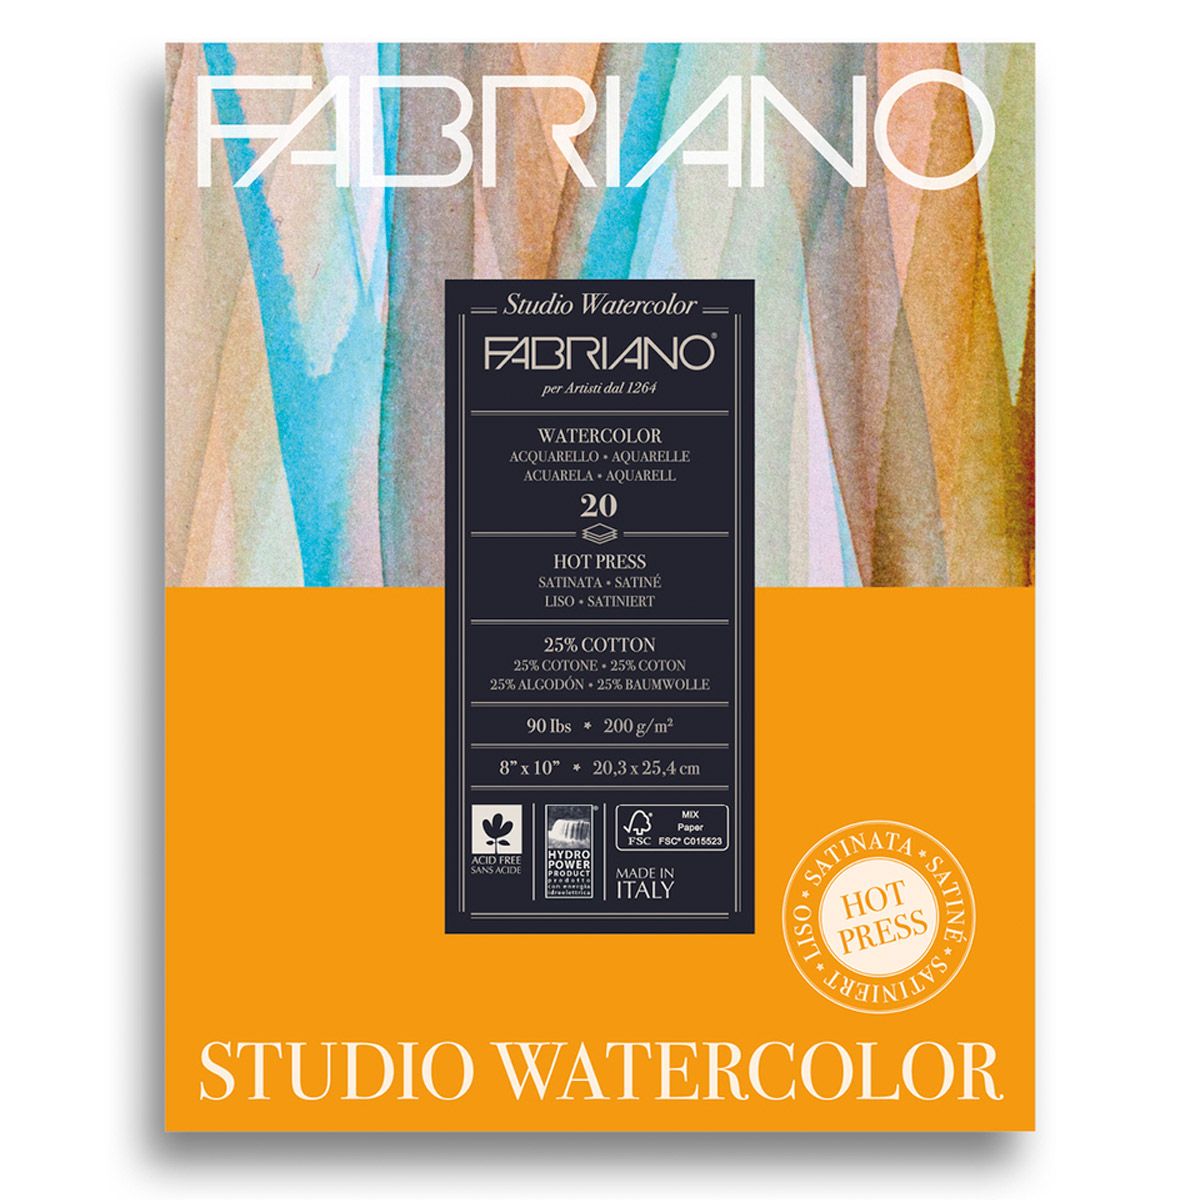 Fabriano Studio Watercolour Pad HP-20 sheets, 90lb 8x10 inch